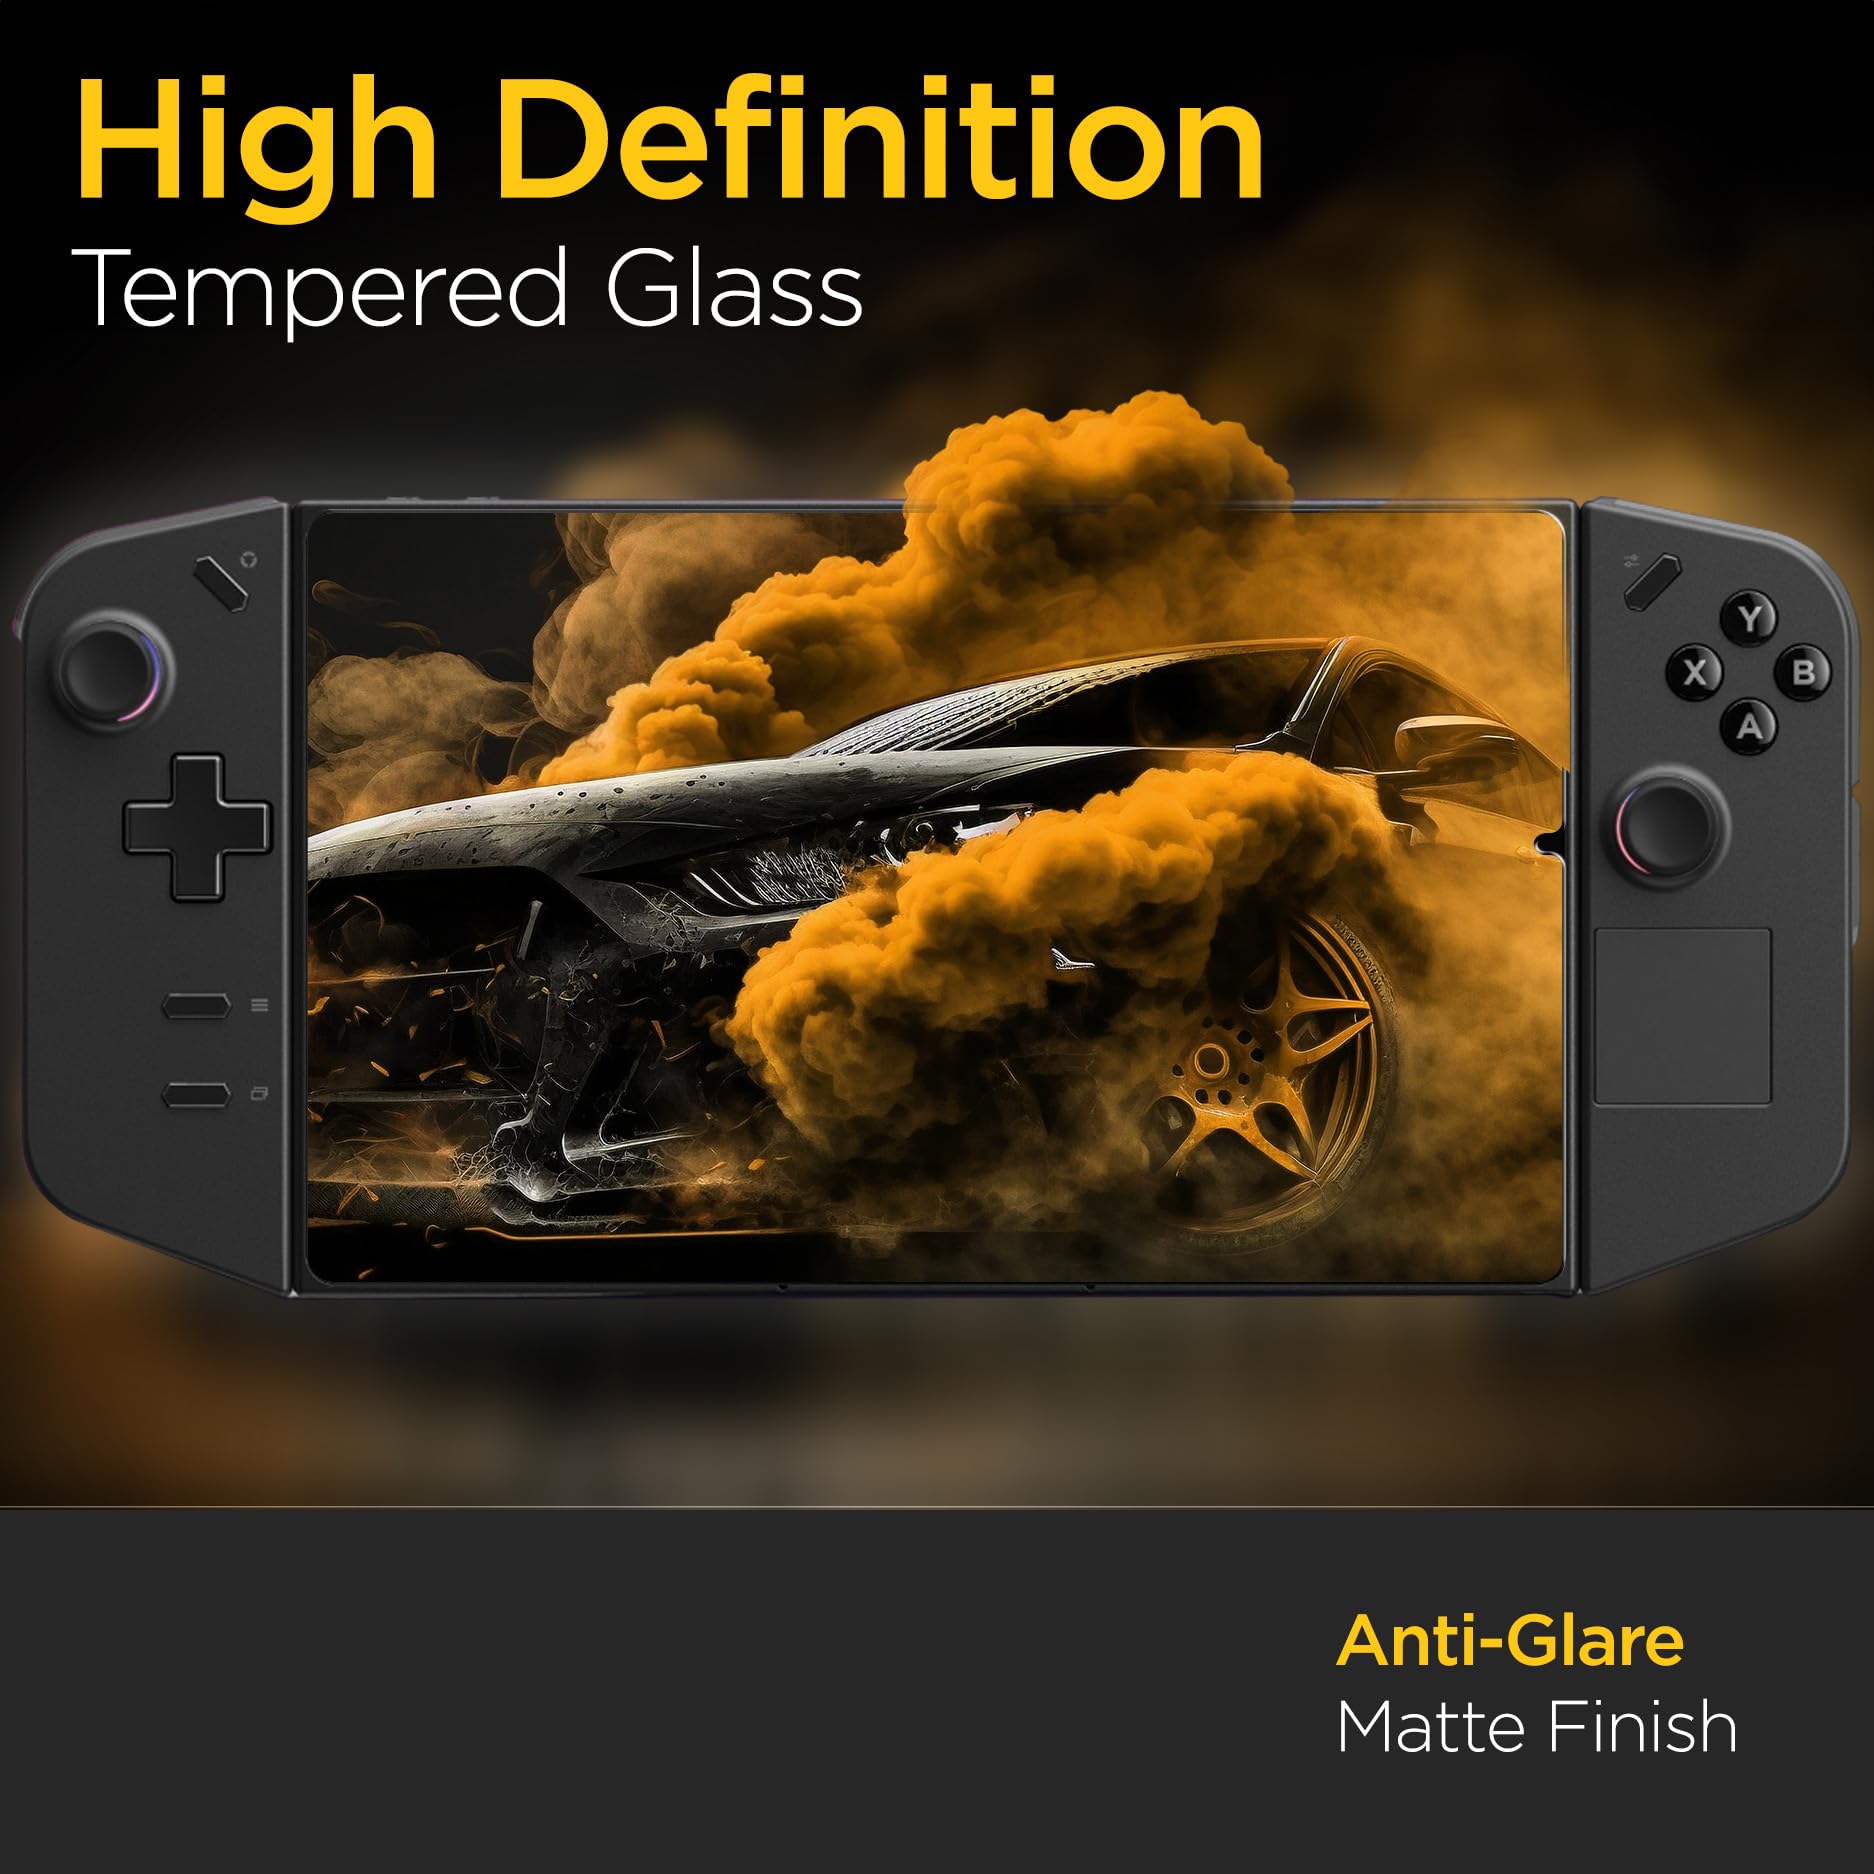 magglass Tempered Glass Designed for Lenovo Legion Go Matte Screen Protector 8.8